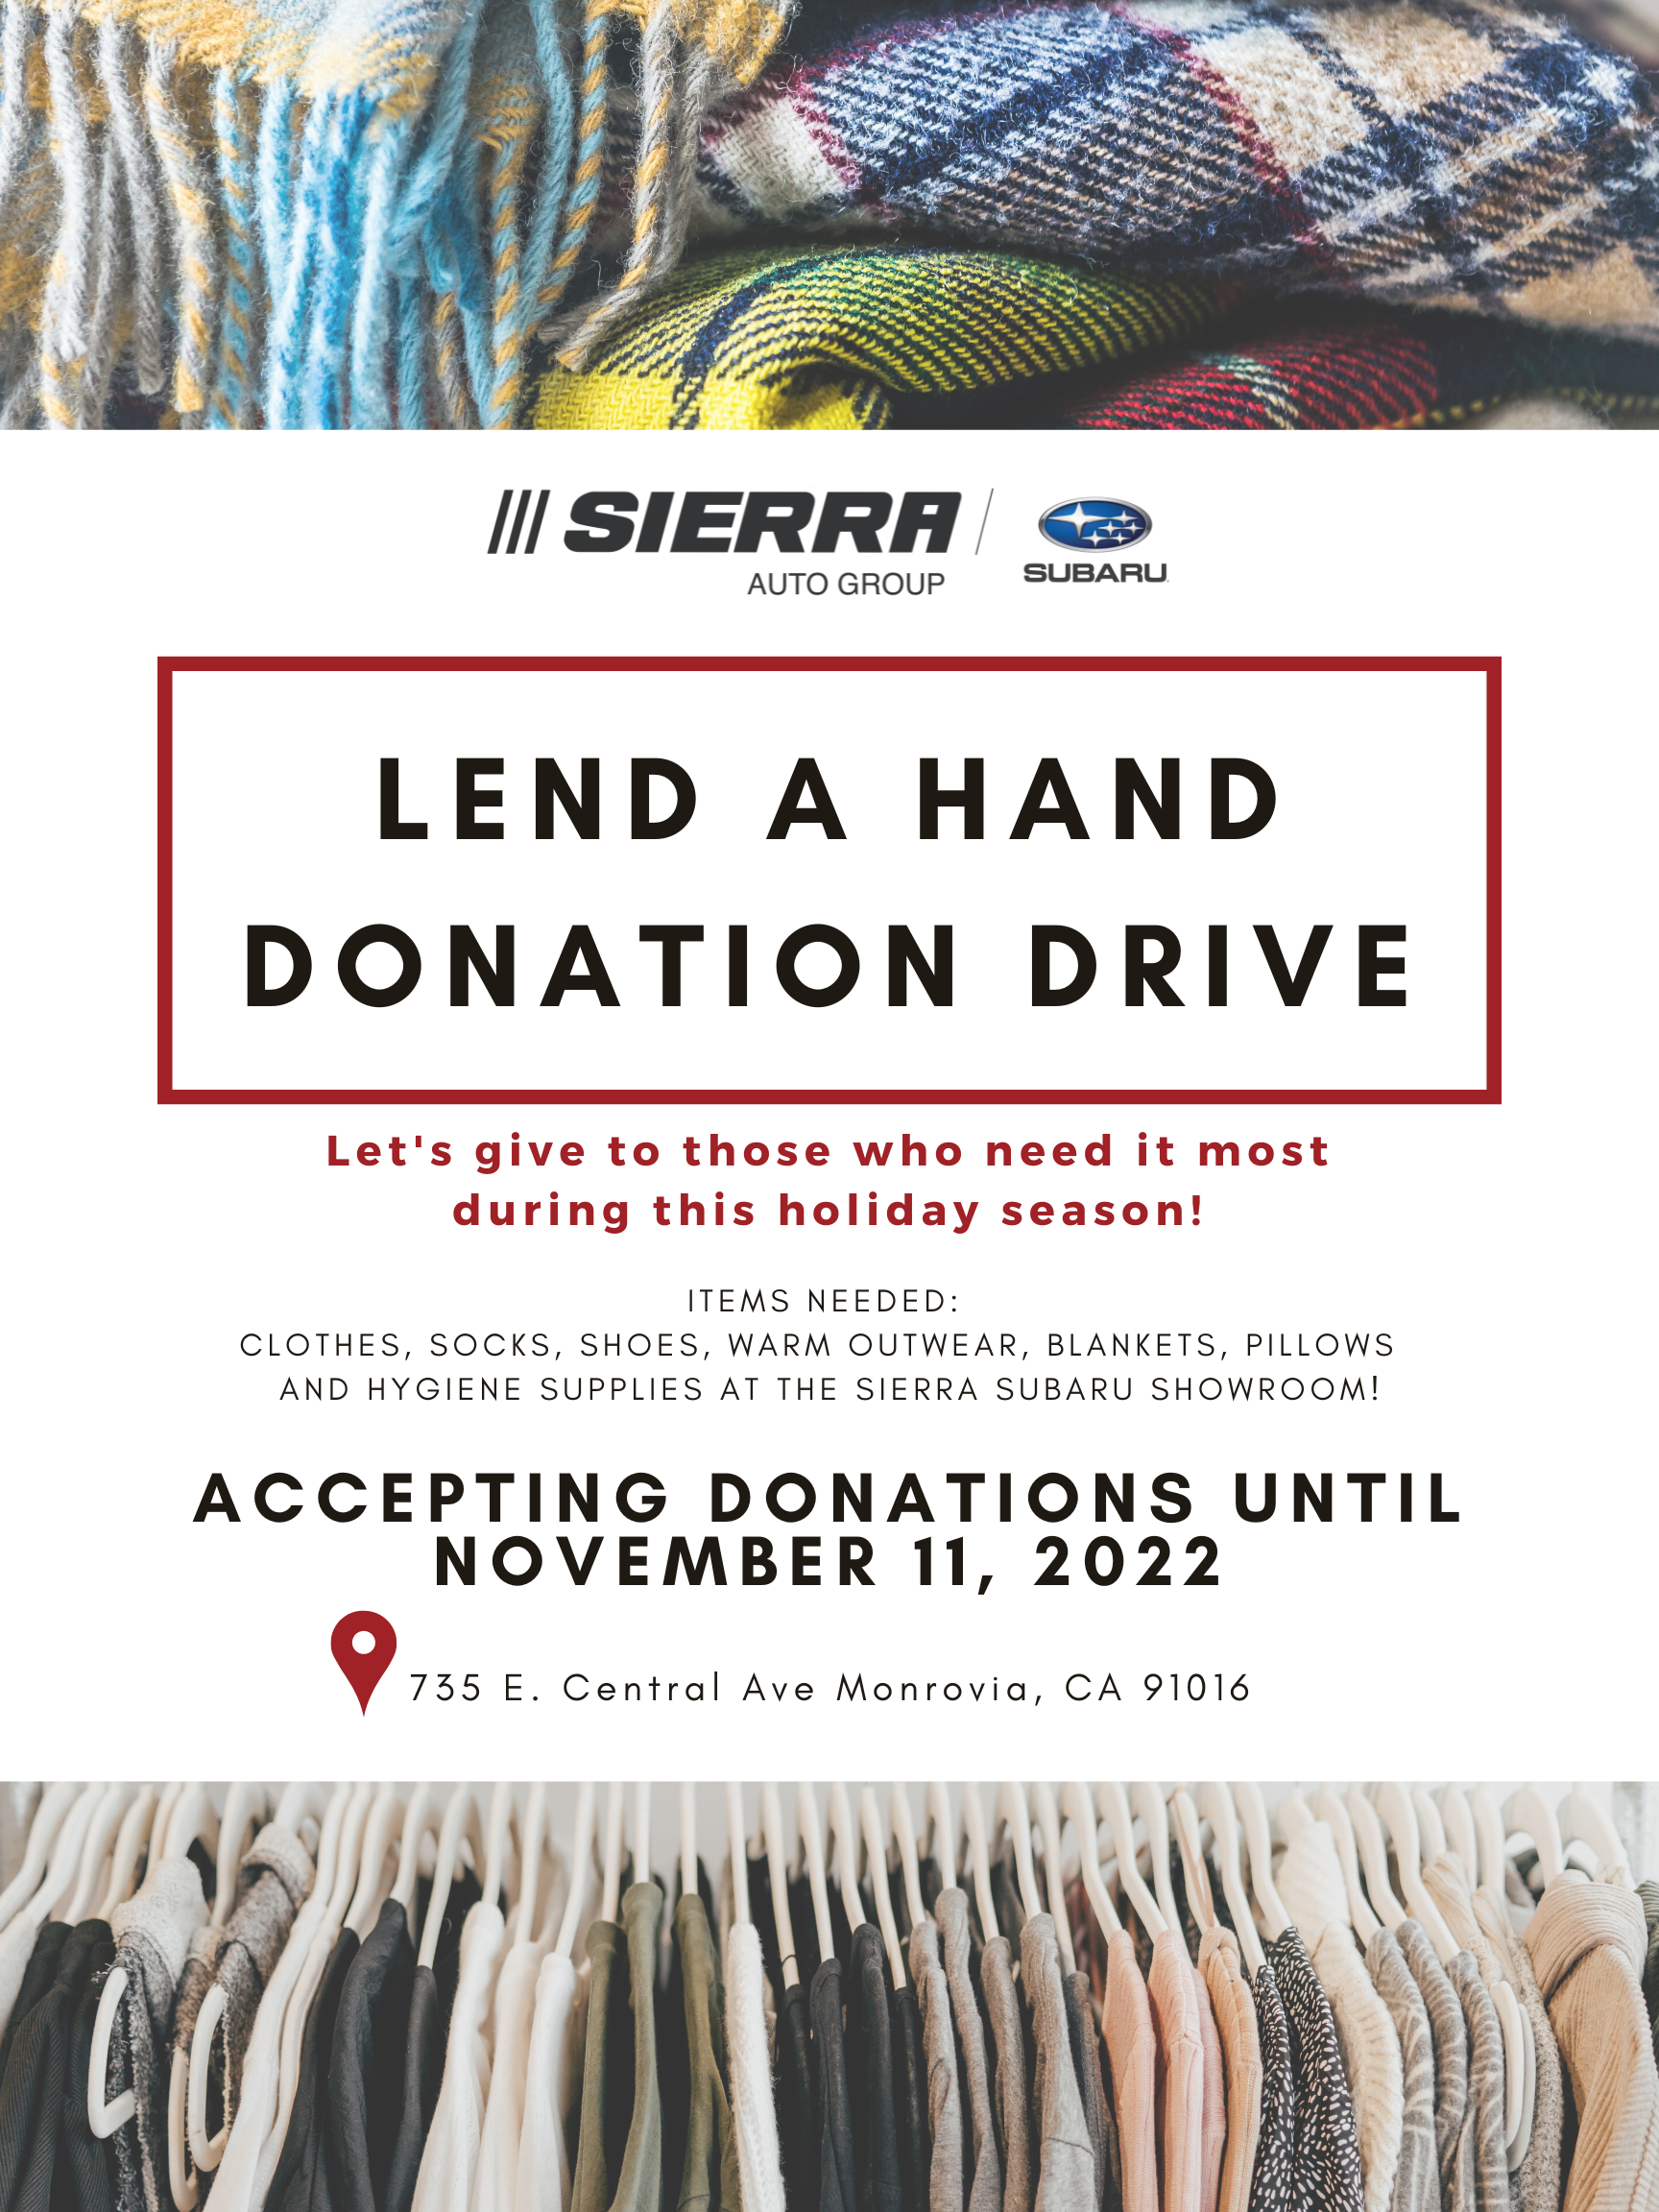 lend a hand donation drive for Sierra Subaru